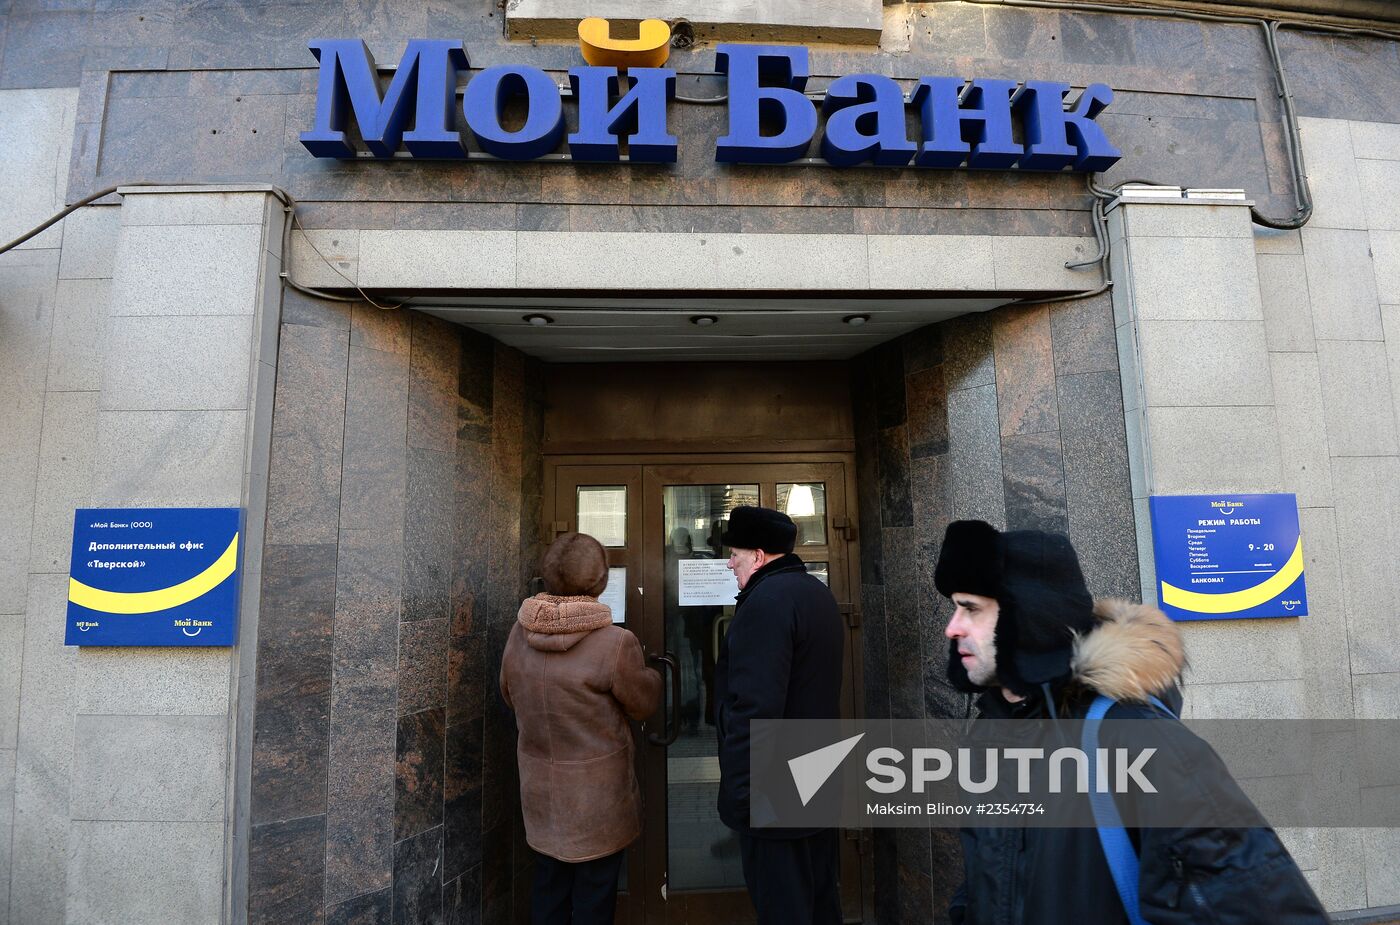 Russian Central Bank revokes license of LLC My Bank